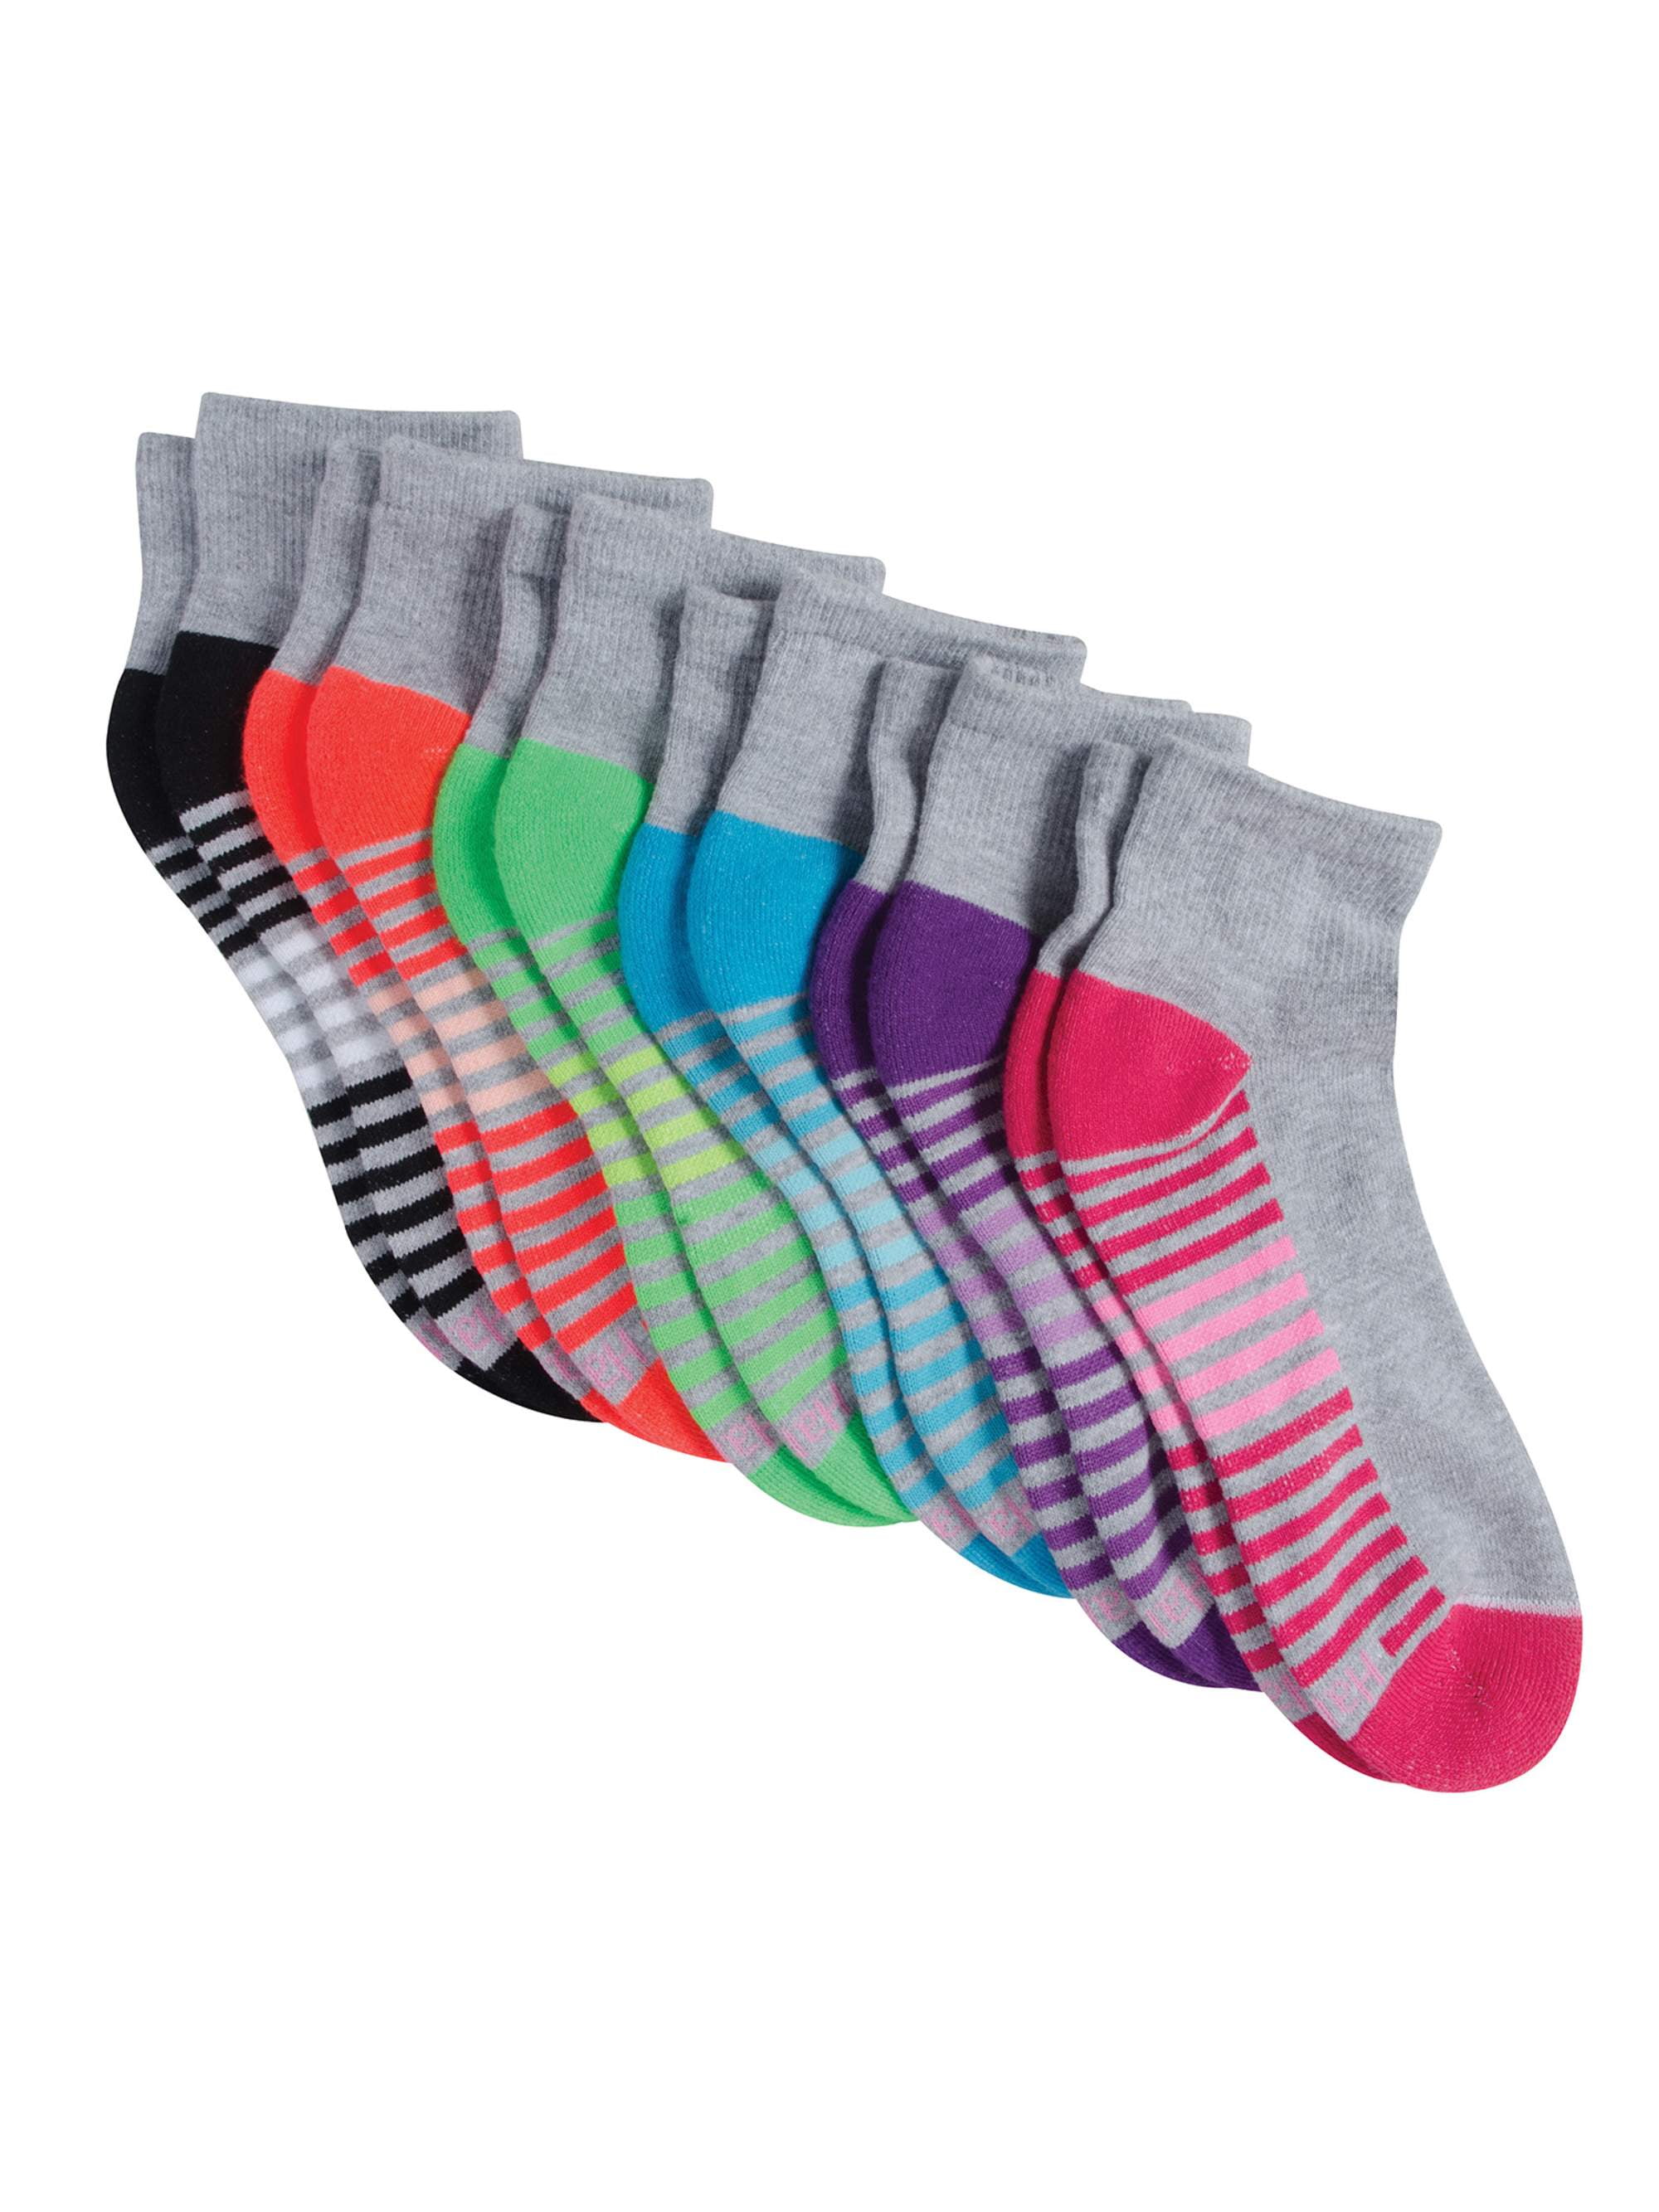 Hanes - Hanes Women's Comfort Fit Ankle Socks, 6 Pack - Walmart.com -  Walmart.com